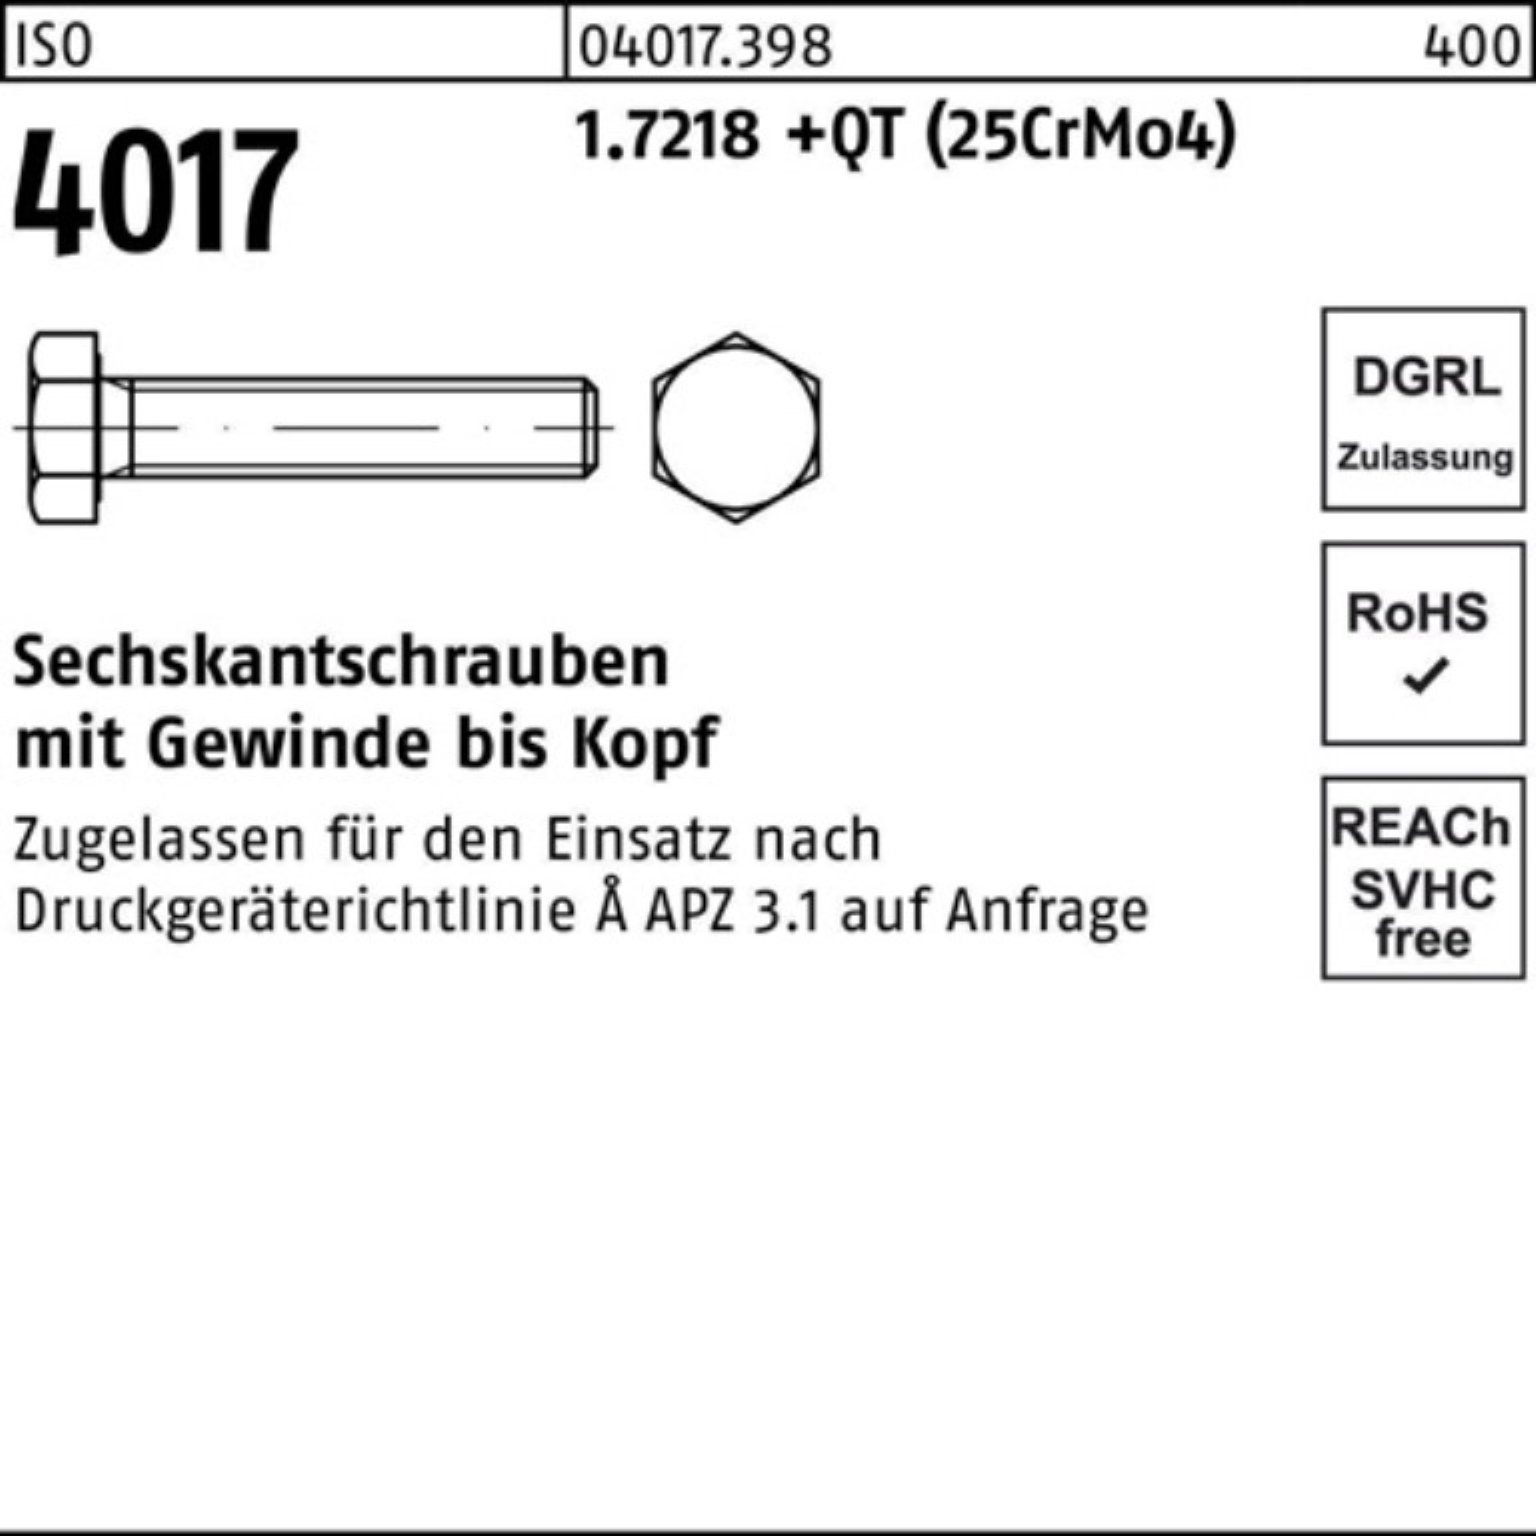 Bufab Sechskantschraube 100er ISO 4017 VG +QT 120 1.7218 Sechskantschraube M16x (25CrMo4) Pack